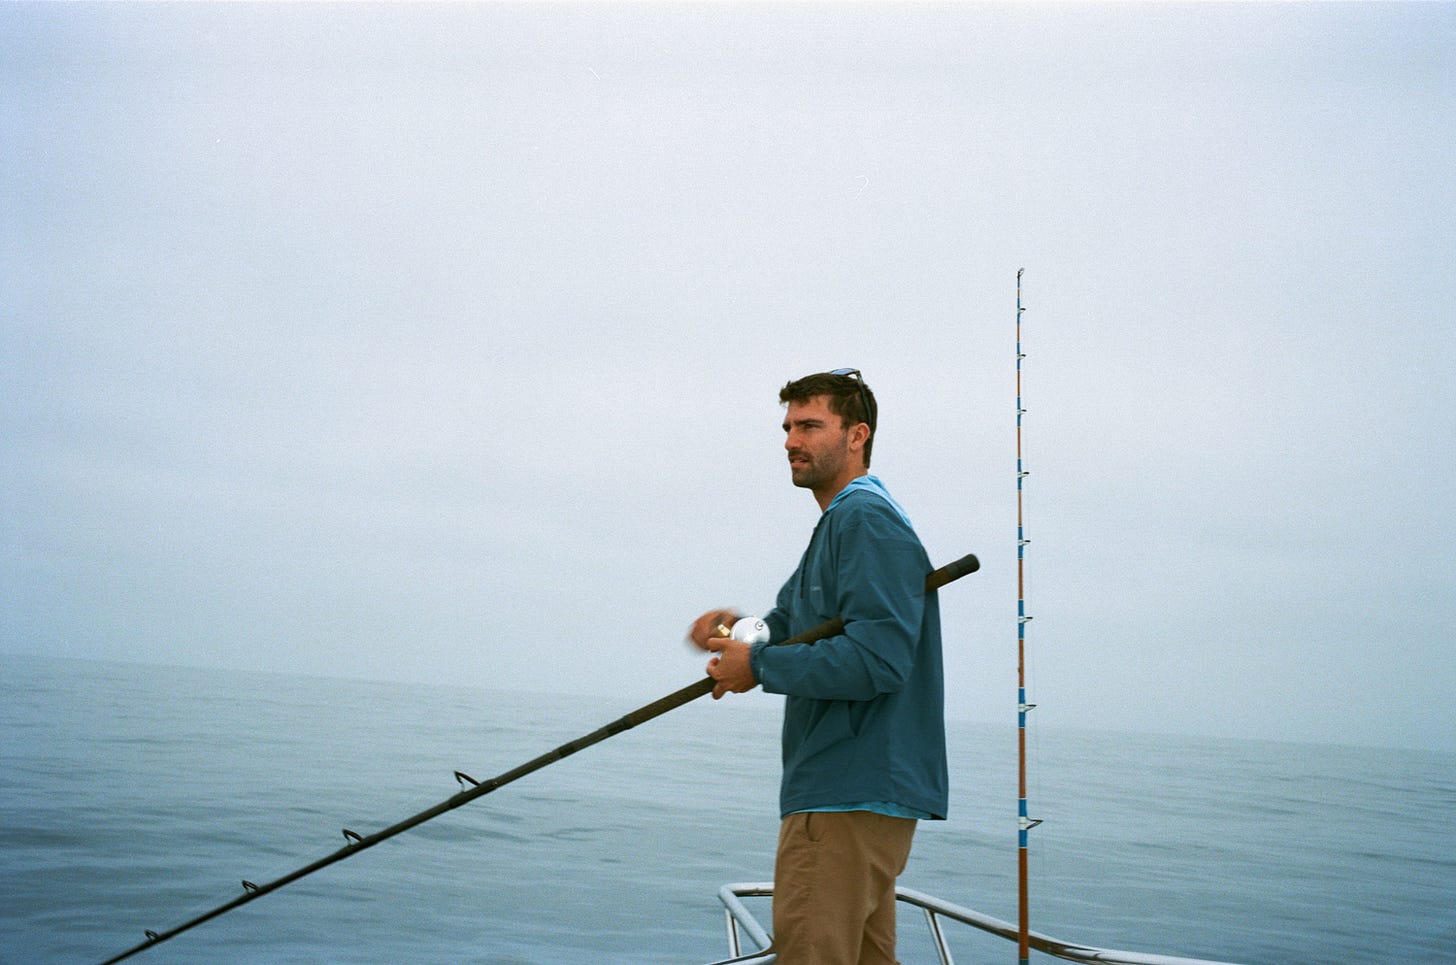 Danny Miller reeling in a tuna